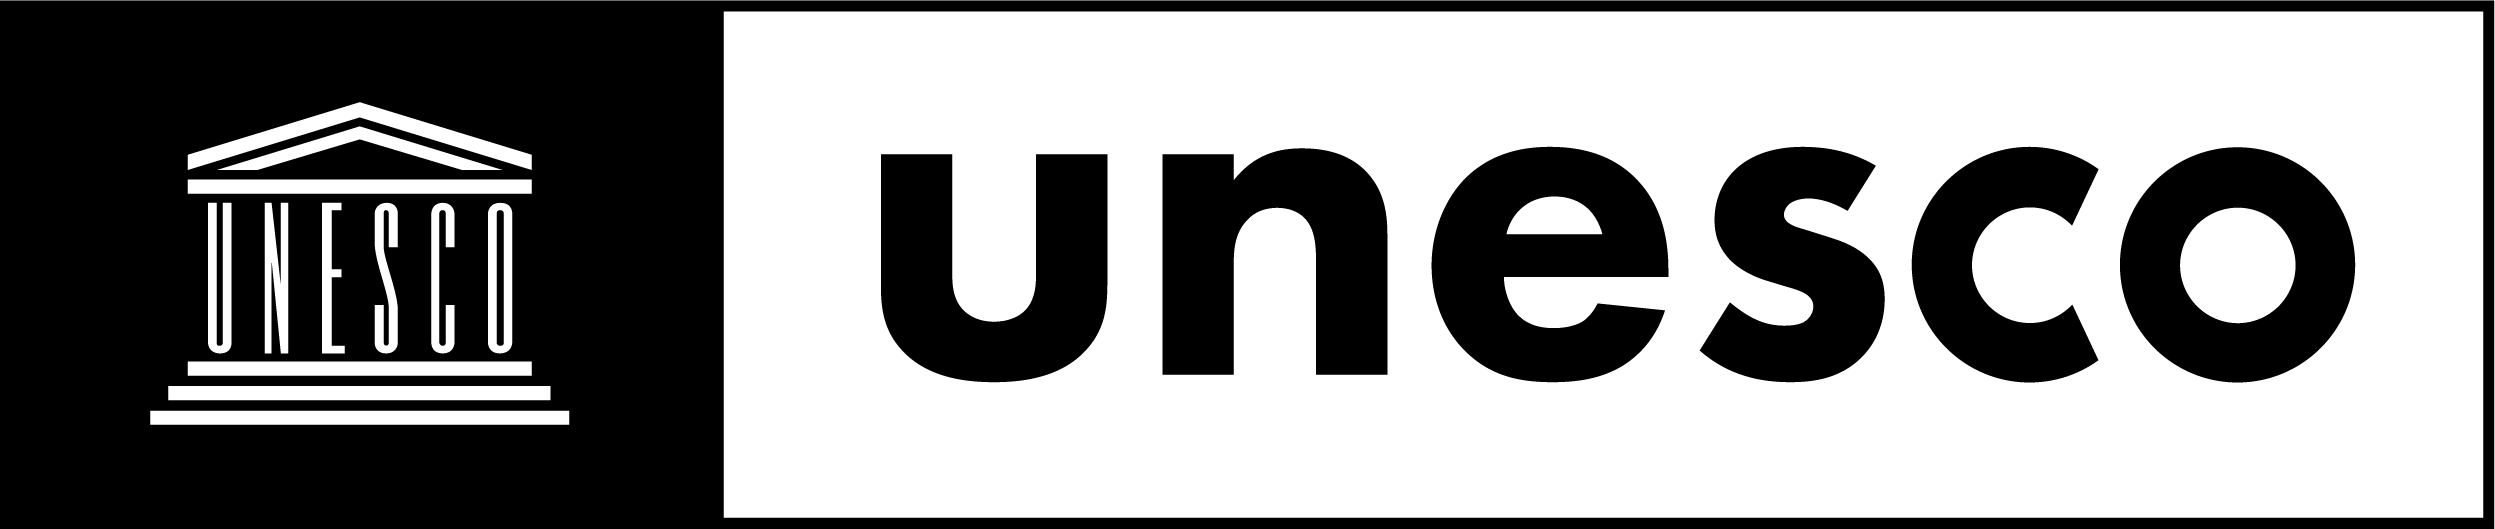 UNESCO_logo_hor_black_transparent.png